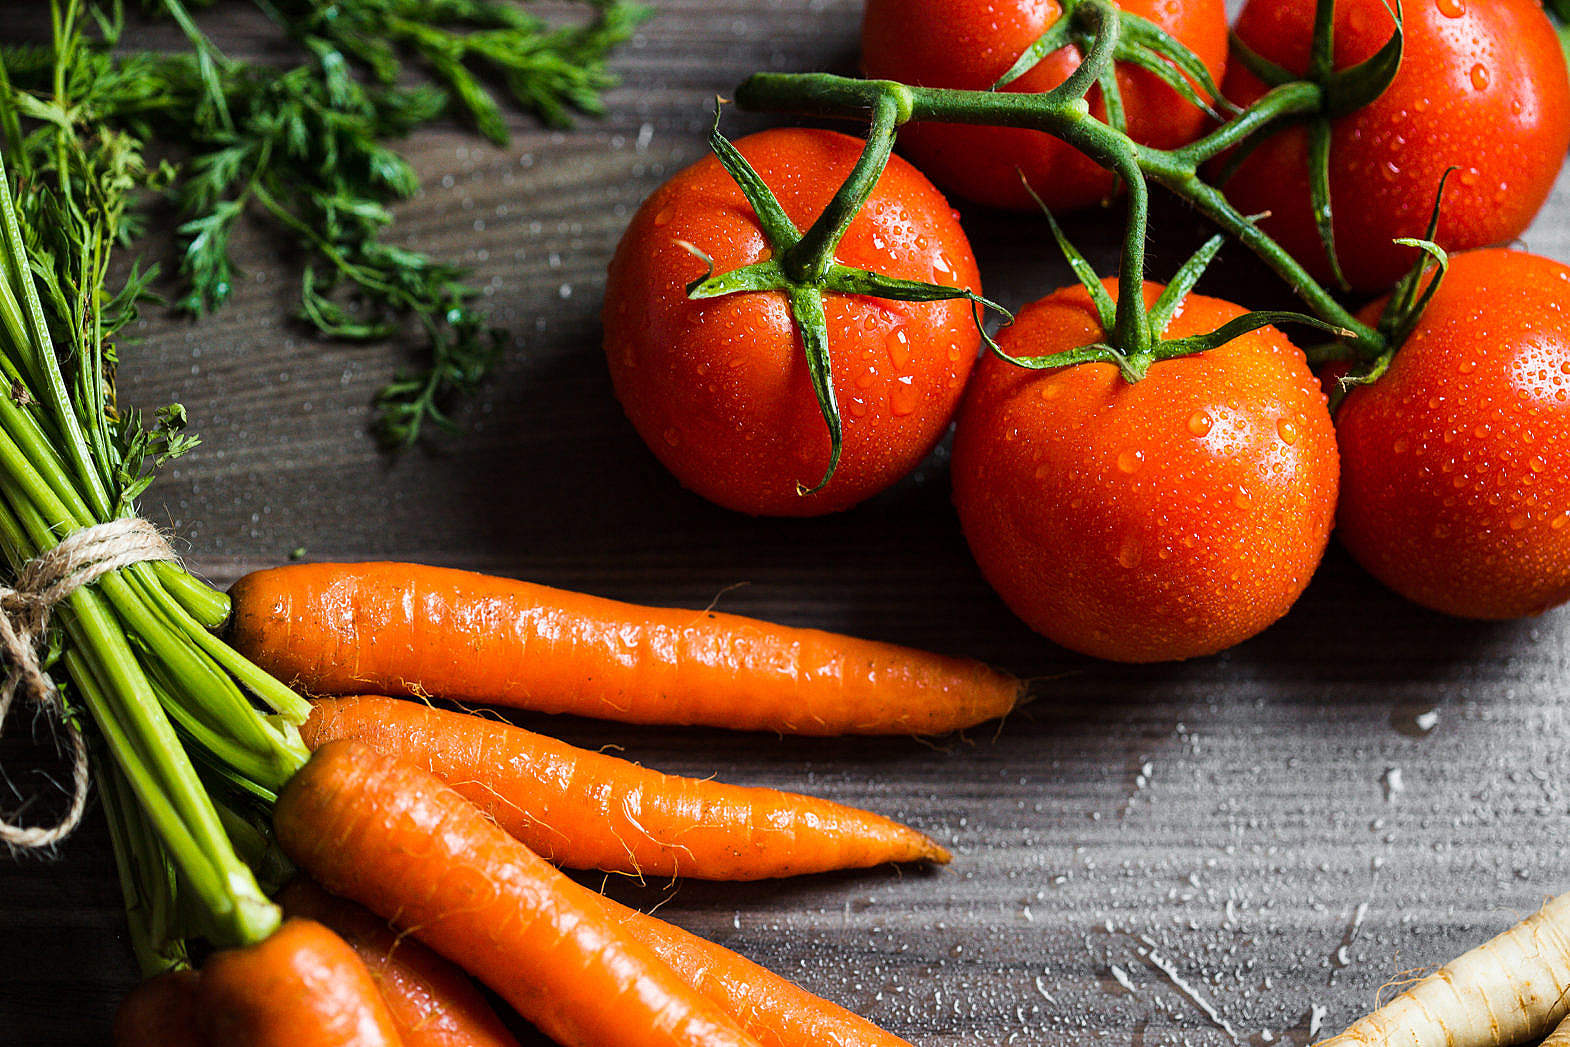 Carrots and Tomatoes Close Up Free Stock Photo | picjumbo